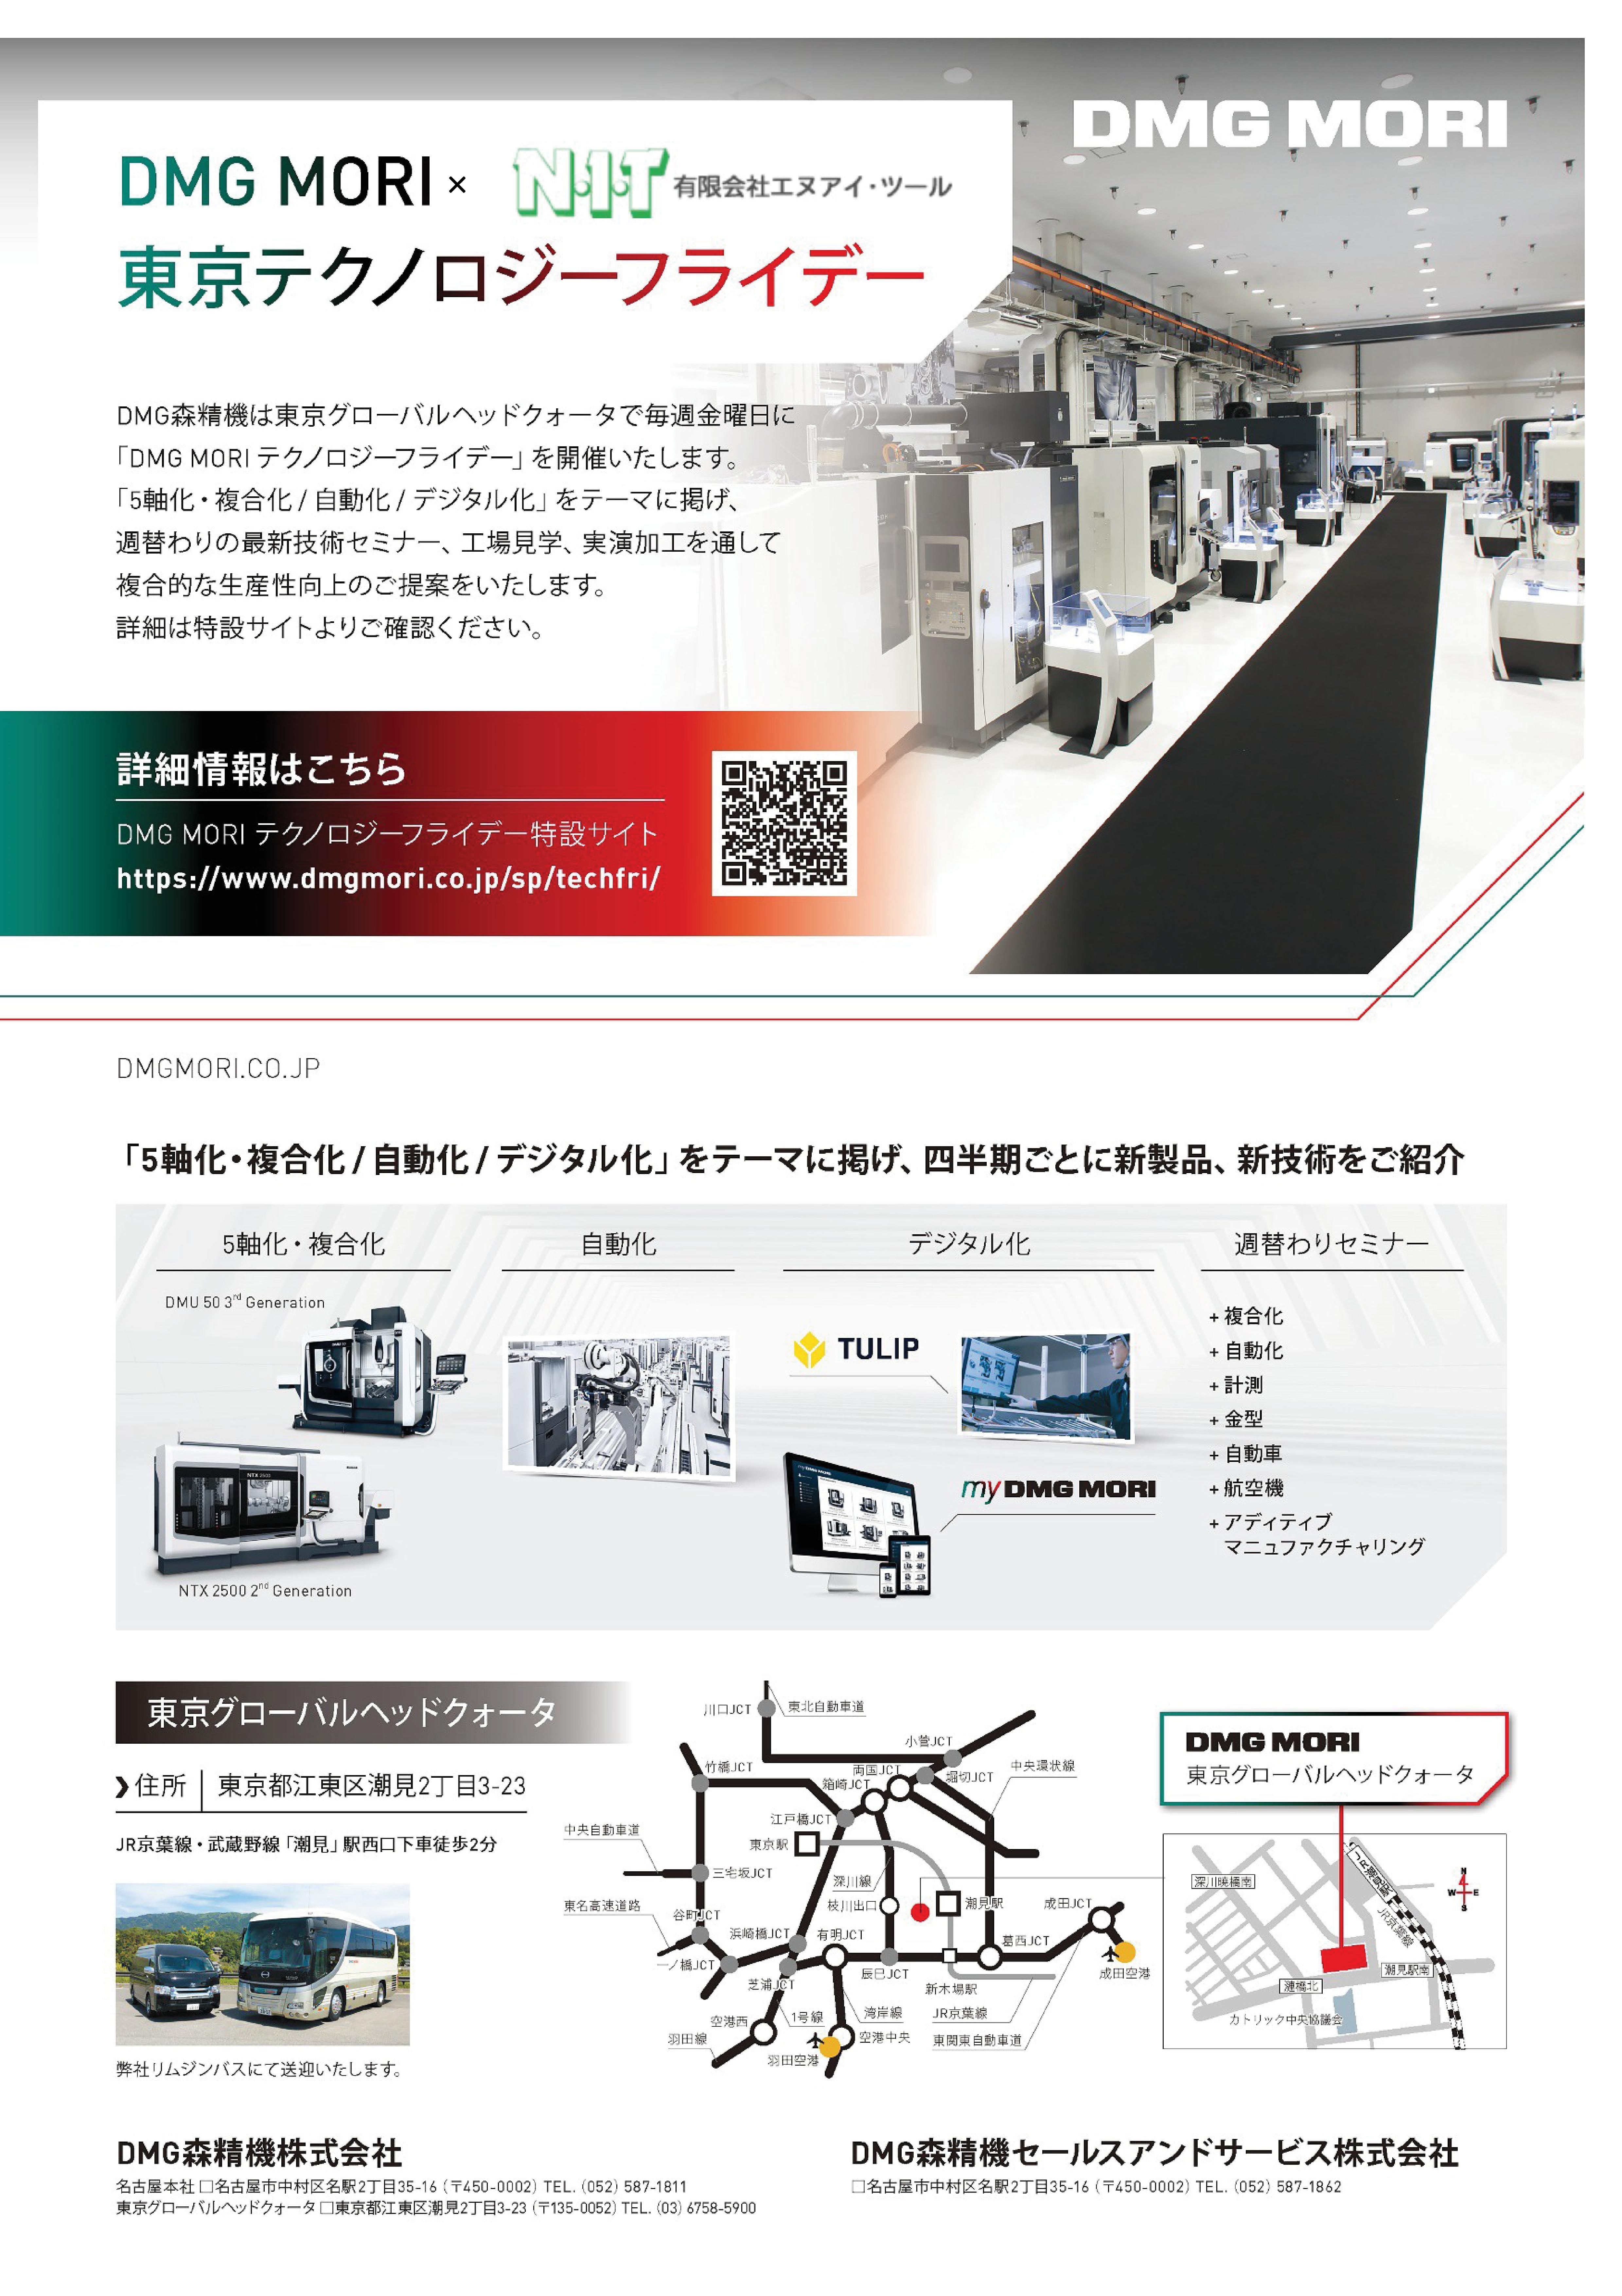 DMG森精機「東京テクノロジーフライデー」の開催報告